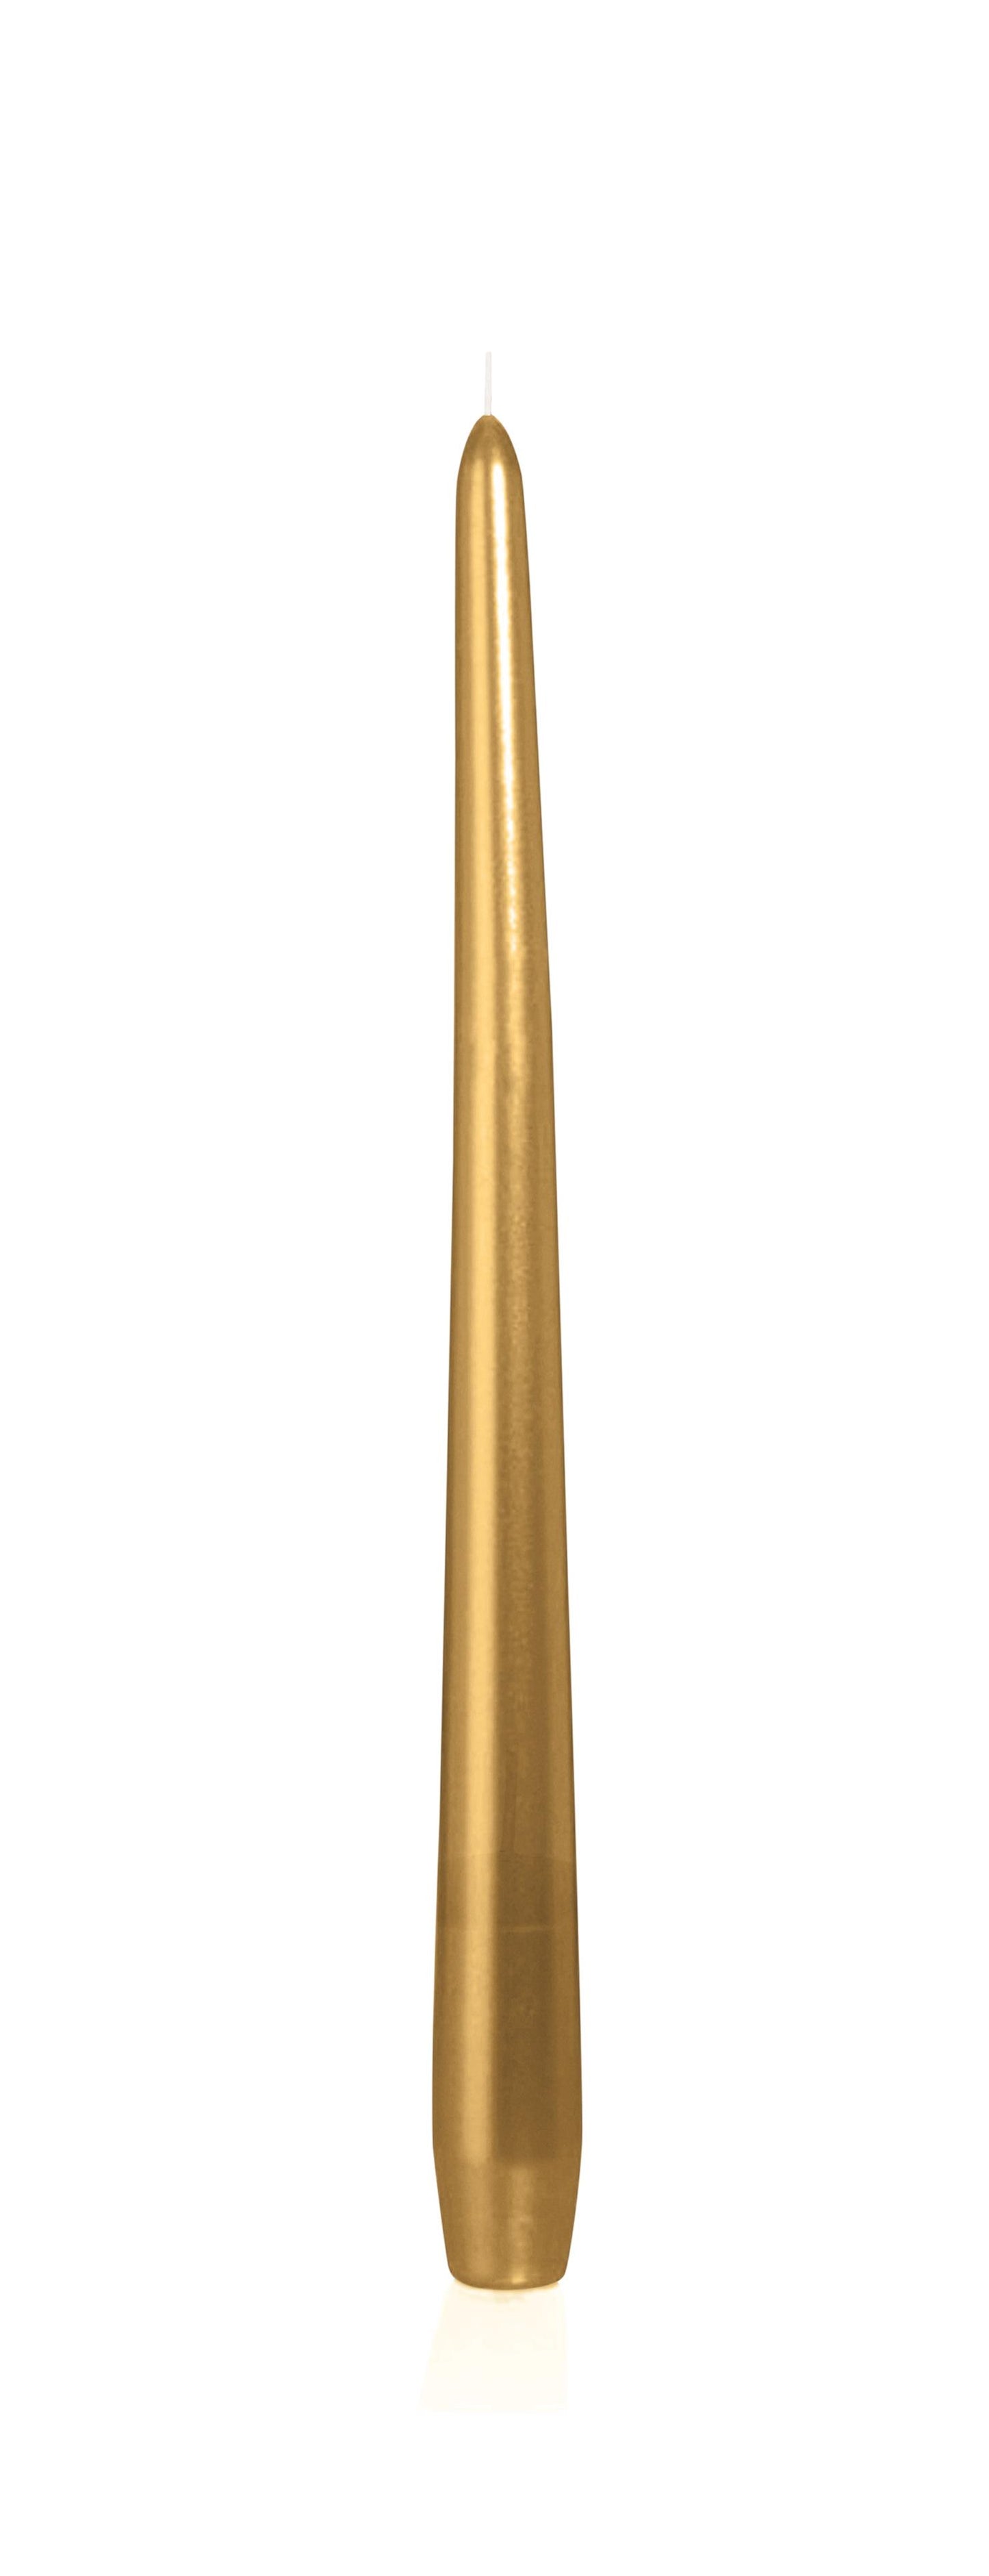 6x Konische Kerzen lackiert in Cellophan 300/25mm (Gold)